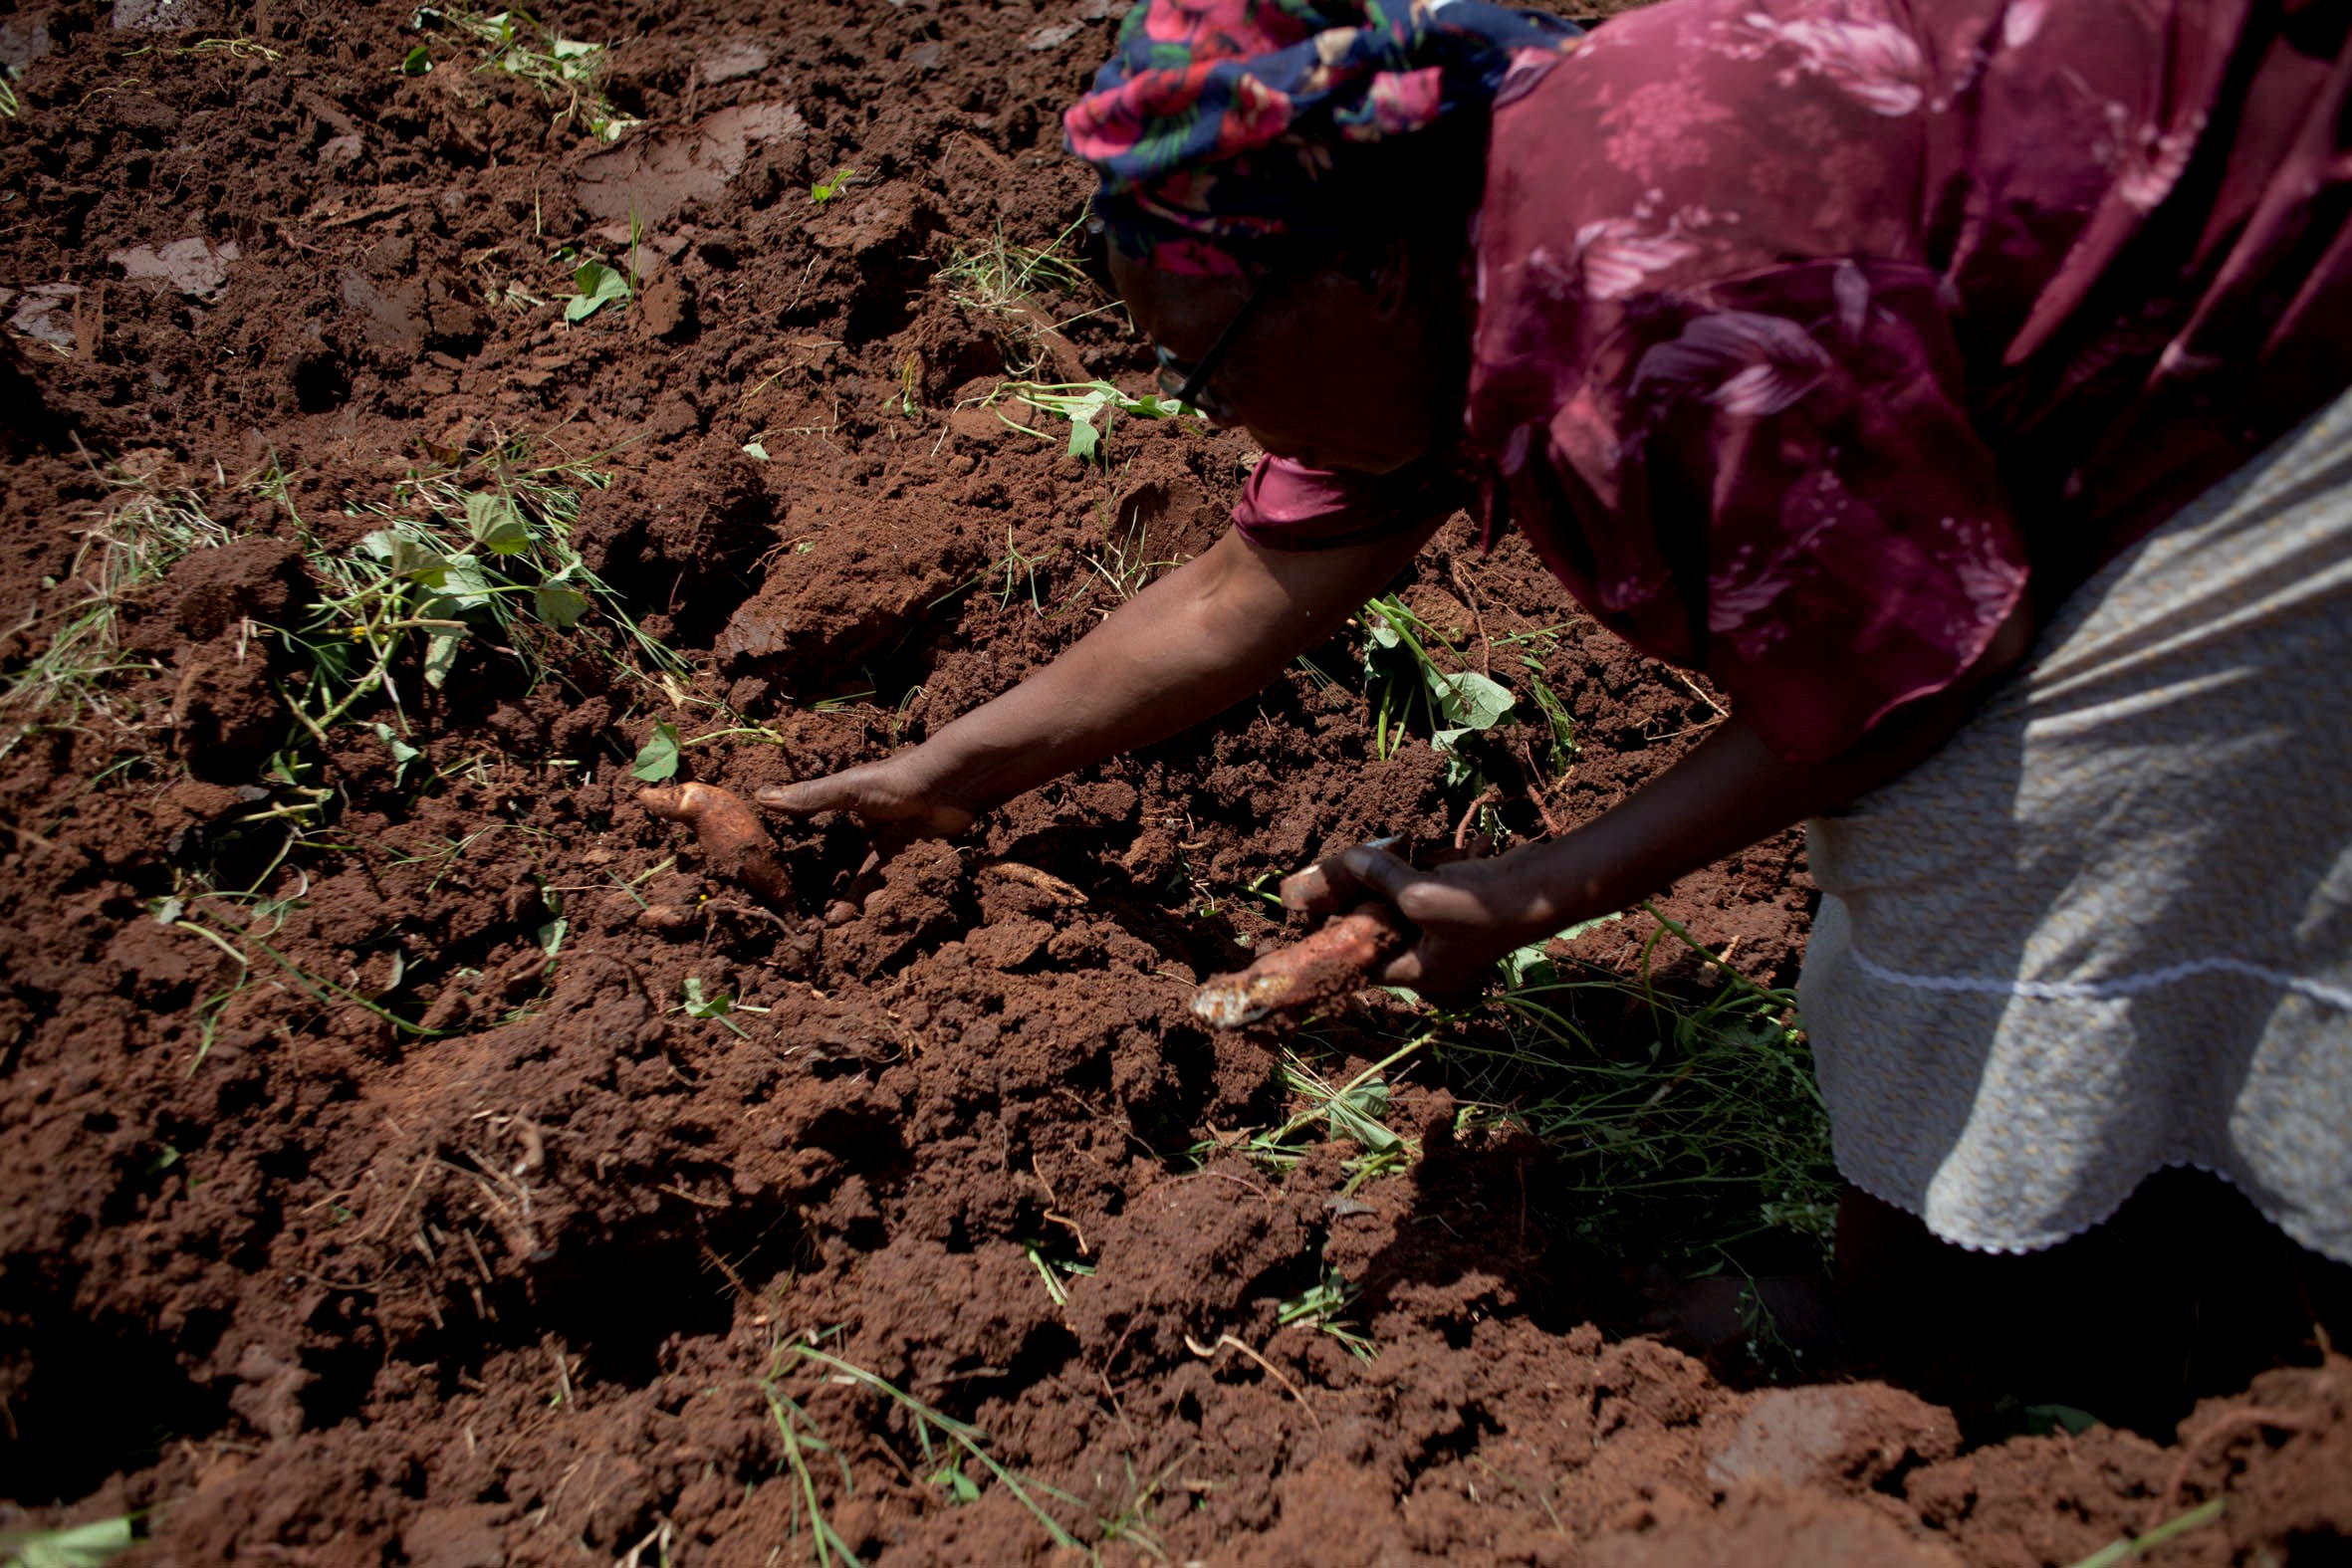 Sarah Dlamini pulls a sweet potato from the rich soil (Pic: Oupa Nkosi)